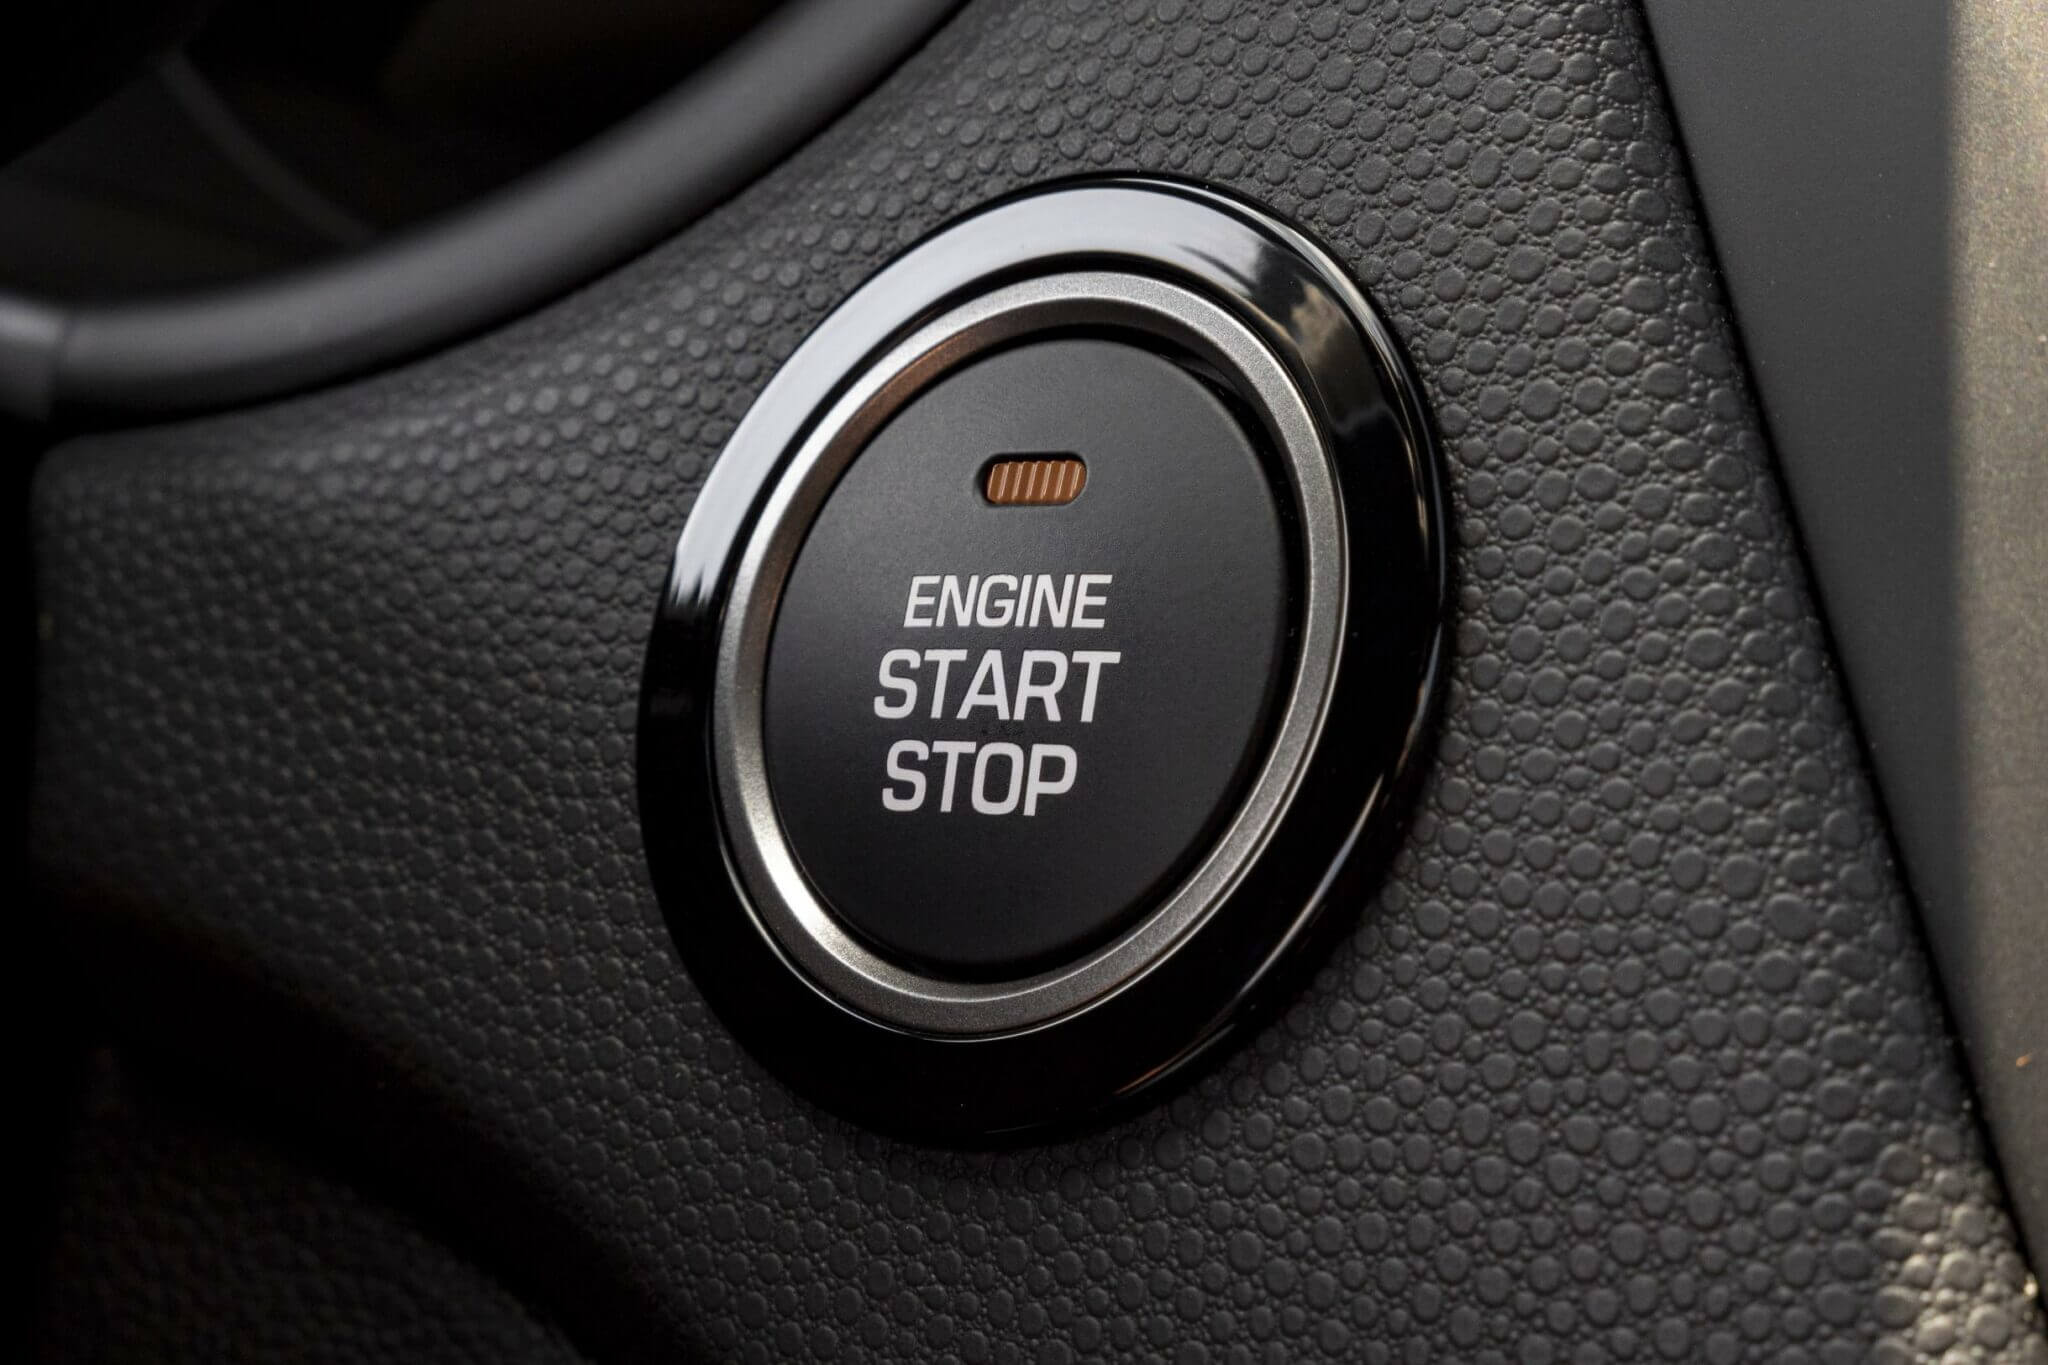 Start ref. Кнопка старт стоп чери Тигго 5. Старт-стоп система для машины. Шевроле Круз 2014 старт стоп. Кнопка старт стоп Audi rsq8.